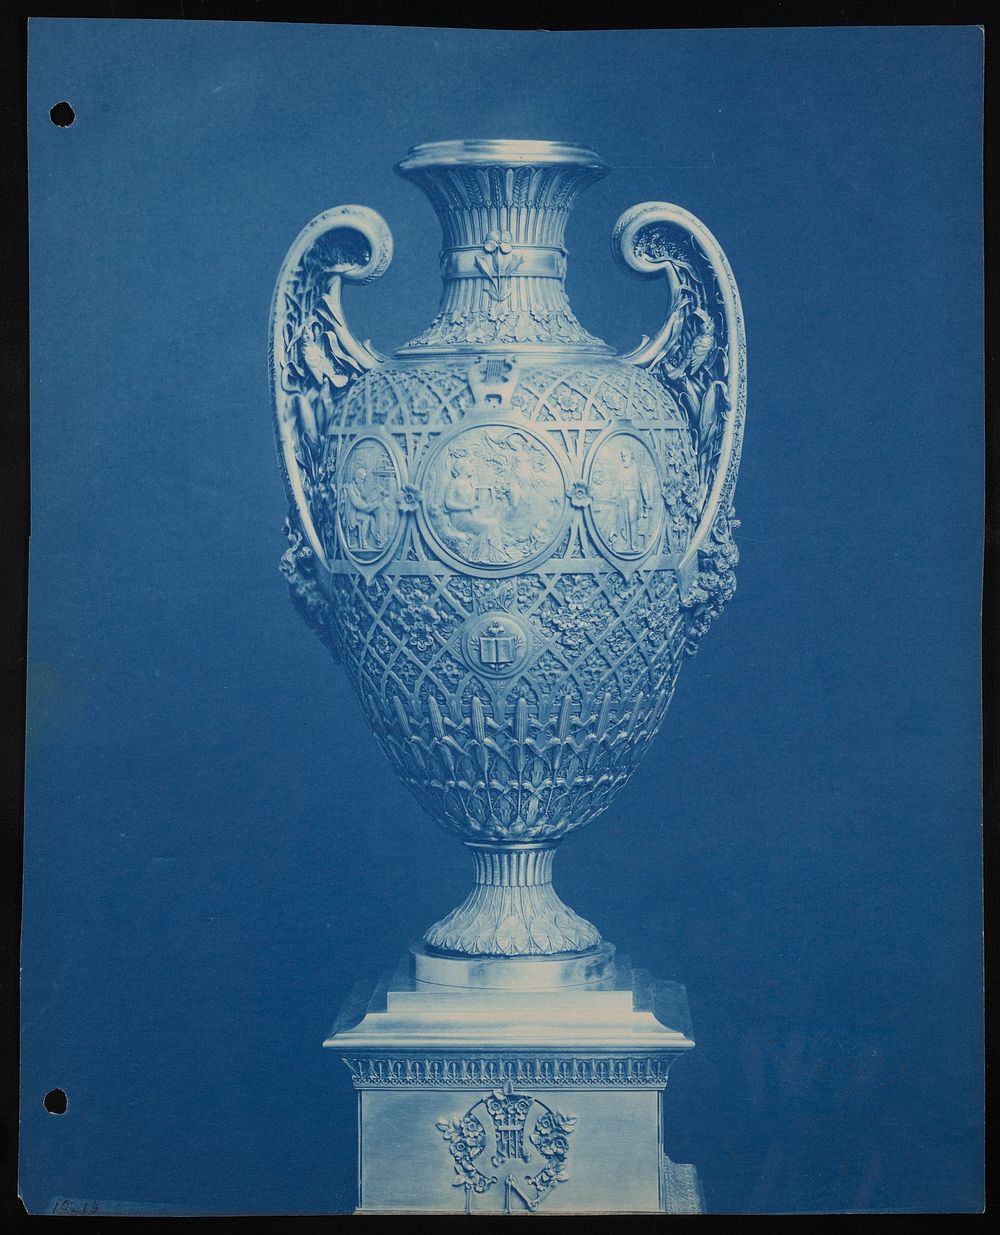 Reproduction of William Cullen Bryant Memorial Vase, United States National Museum